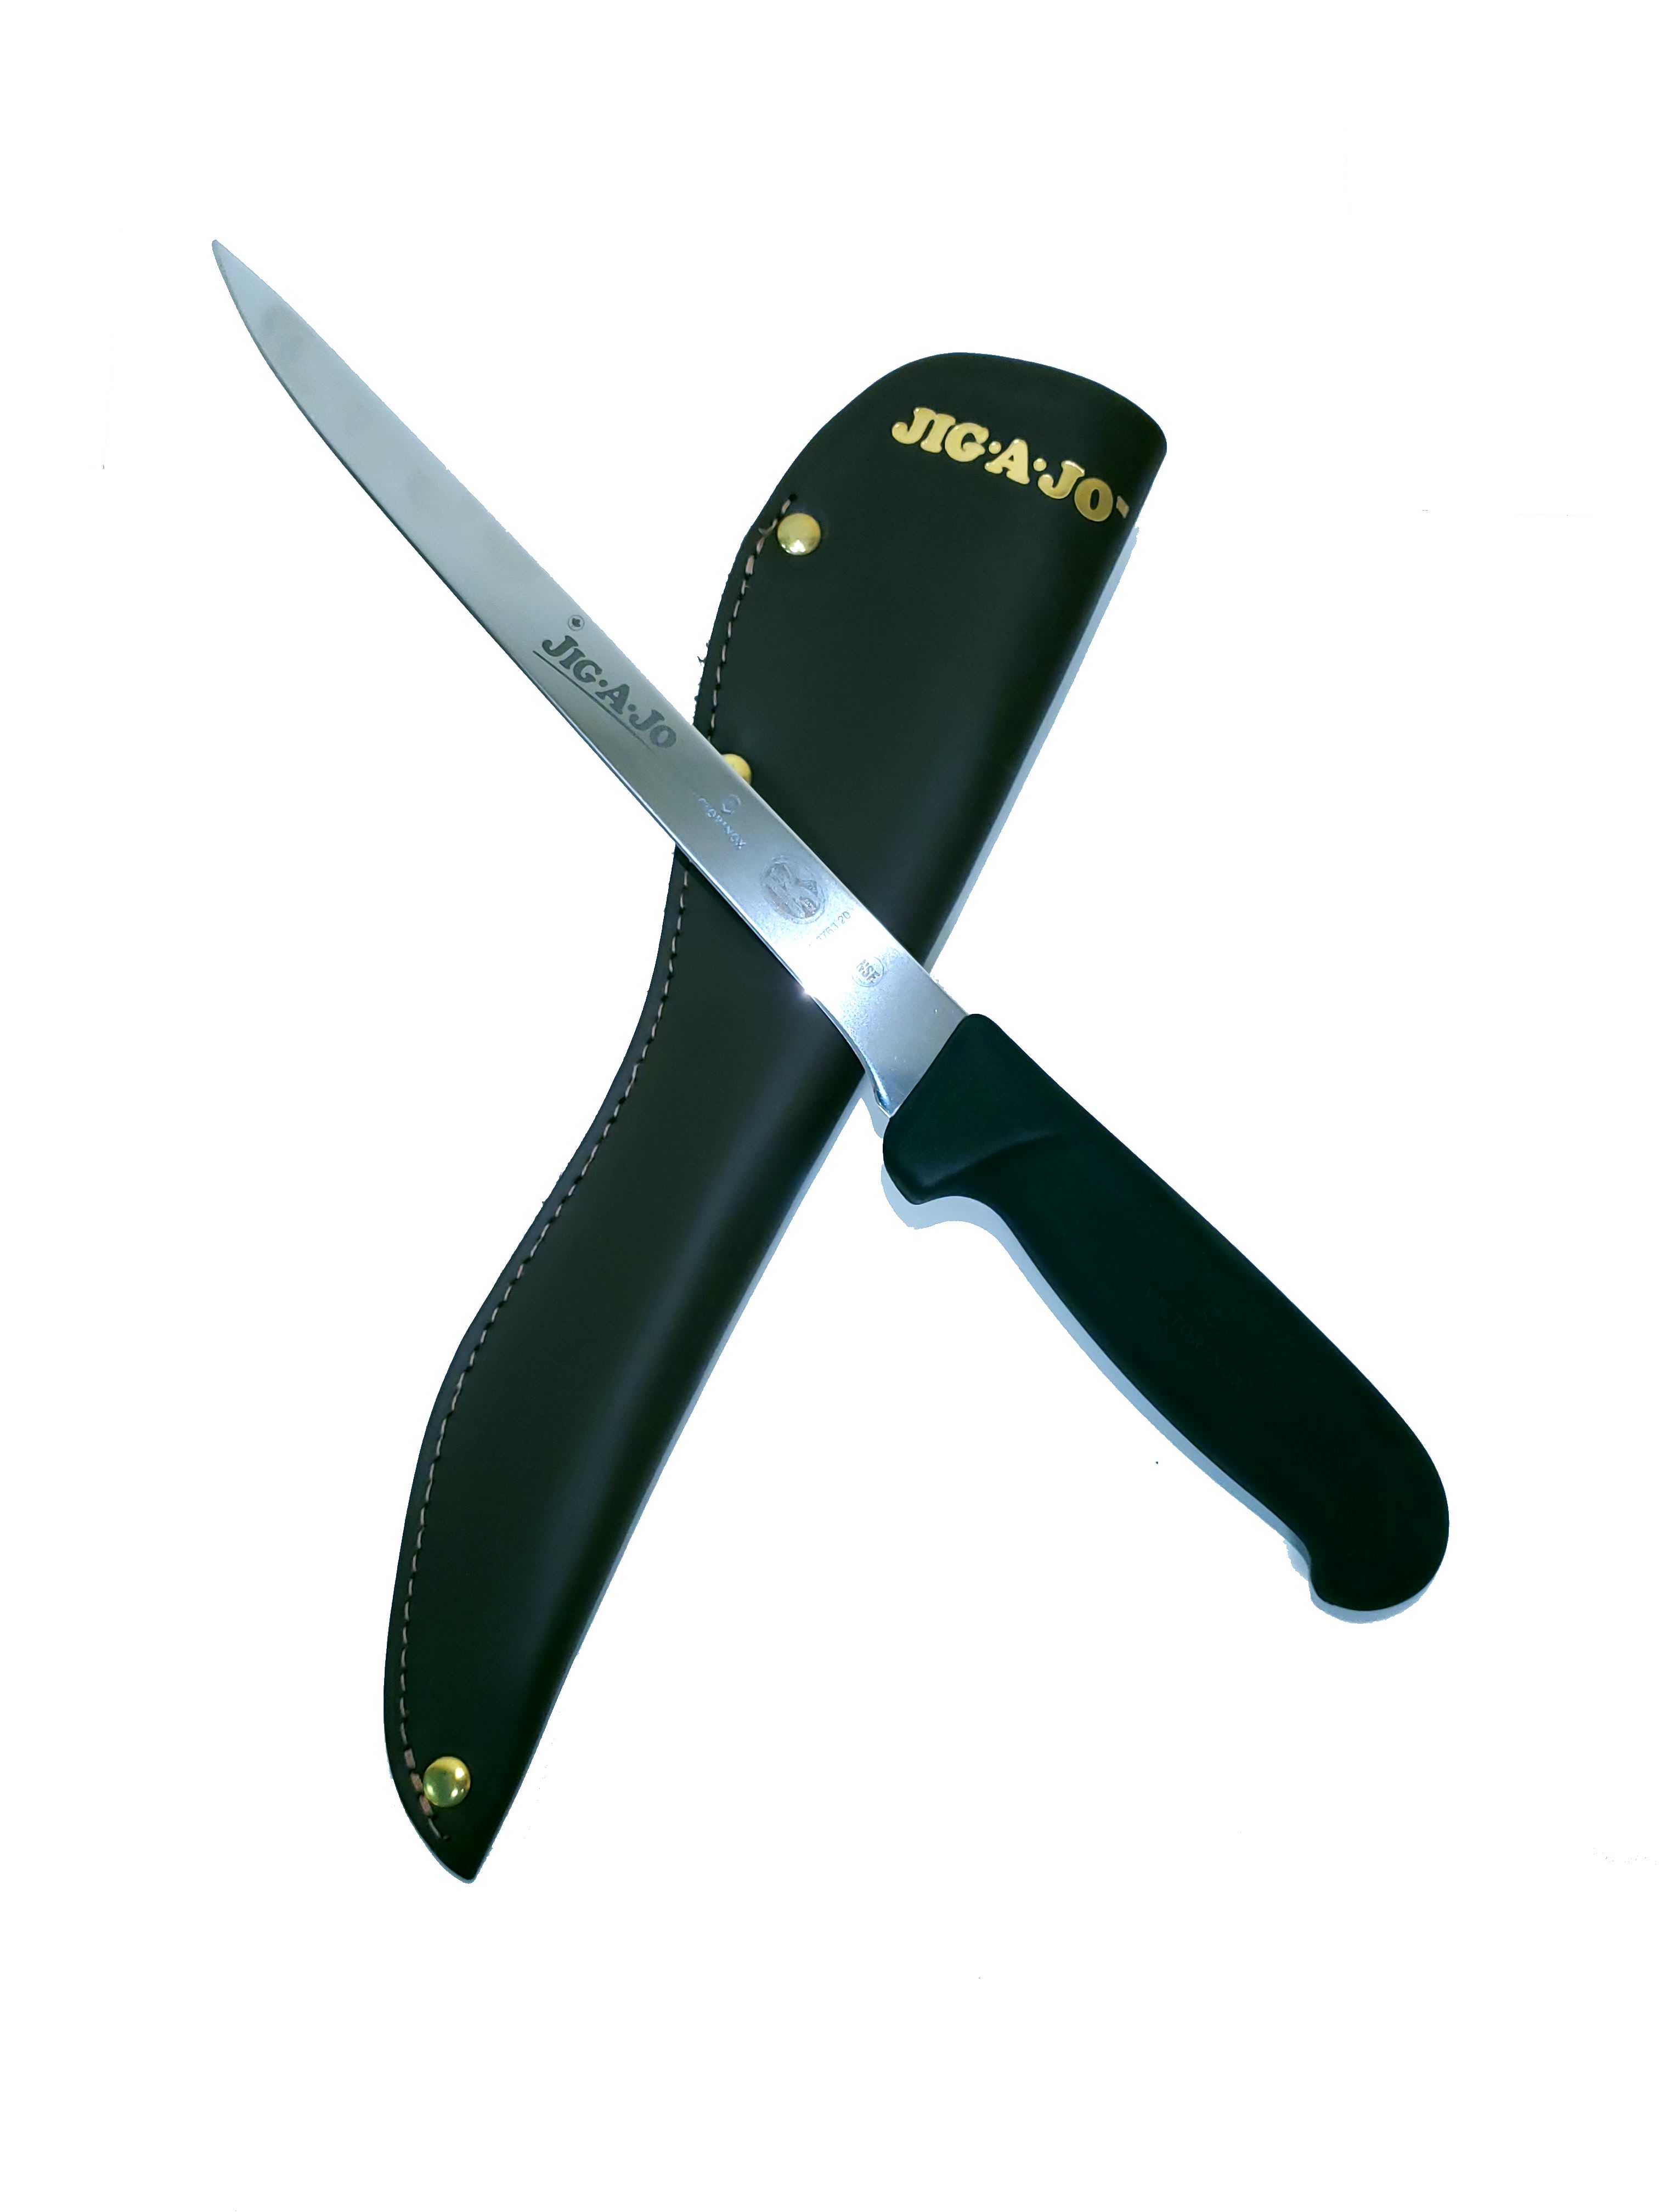 JIG-A-JO Filleting Knife with Sheath